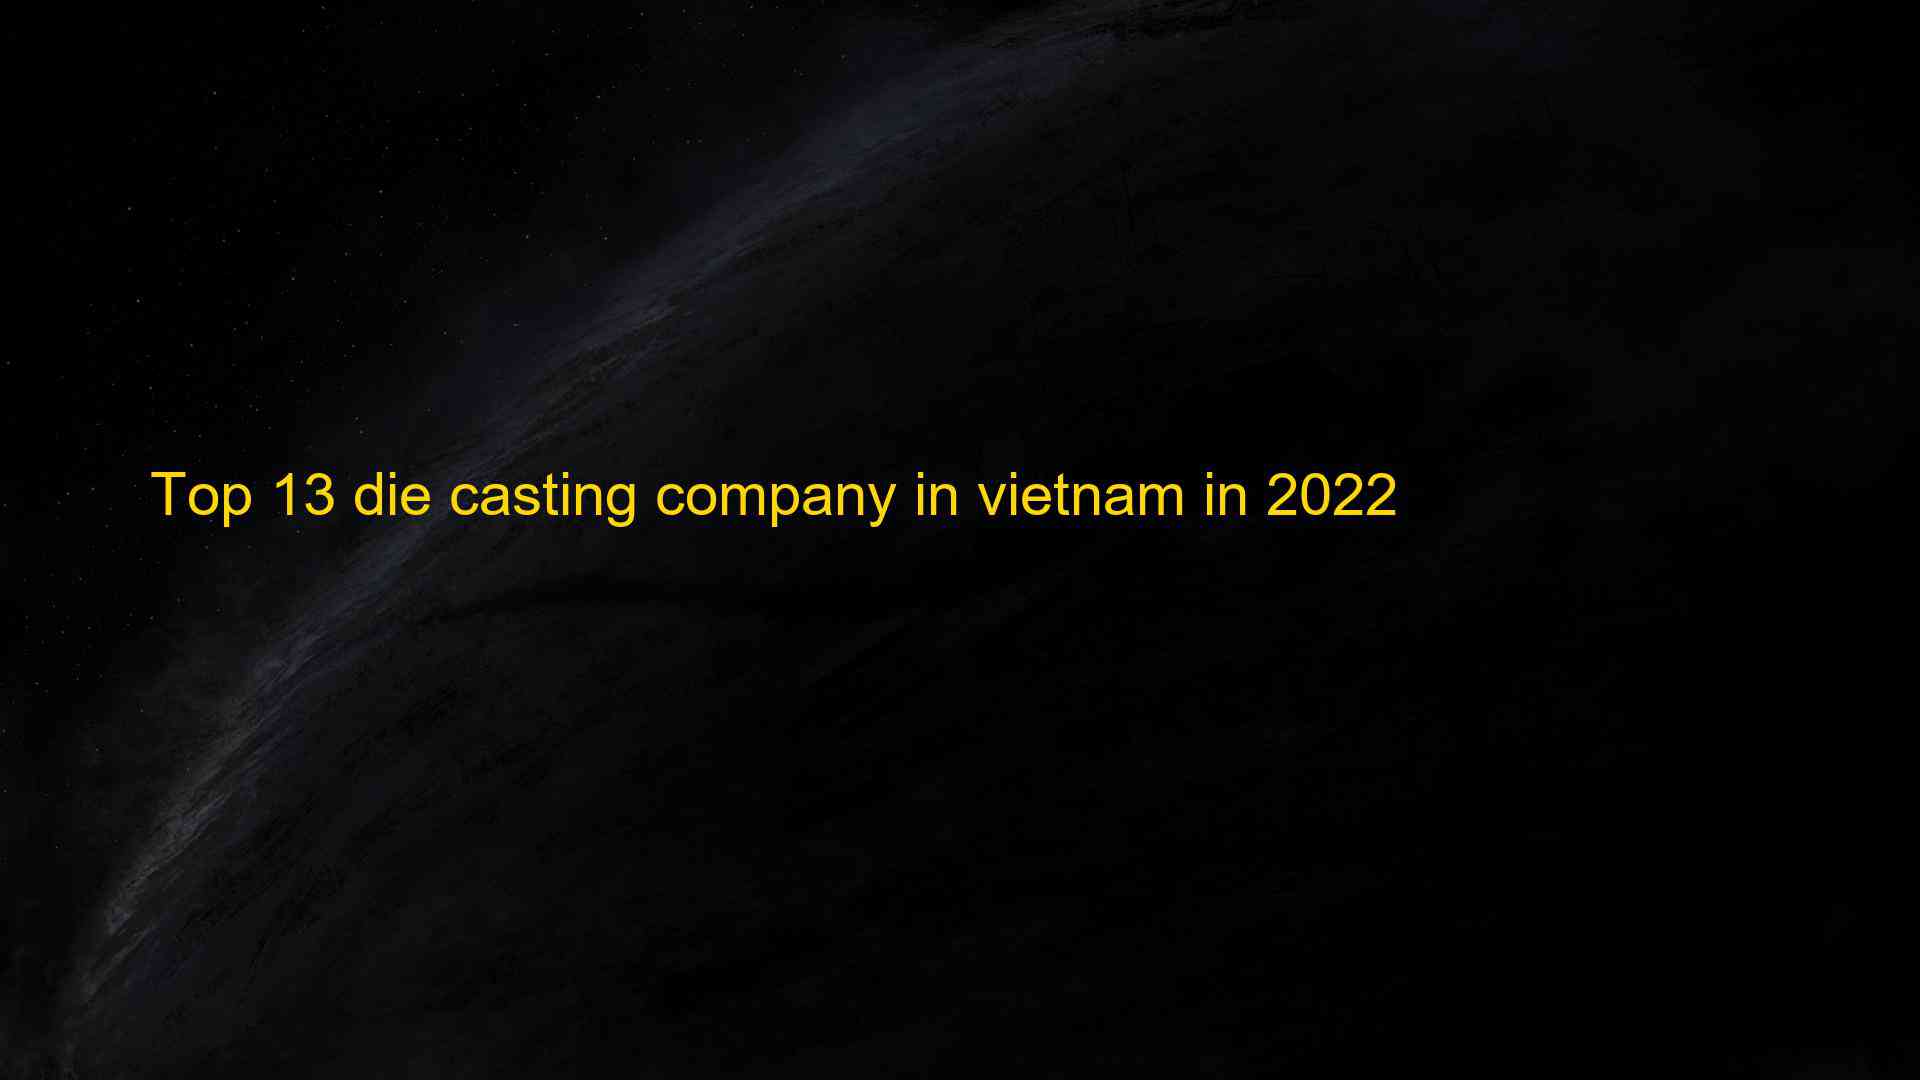 Top 13 die casting company in vietnam in 2022 1660106320